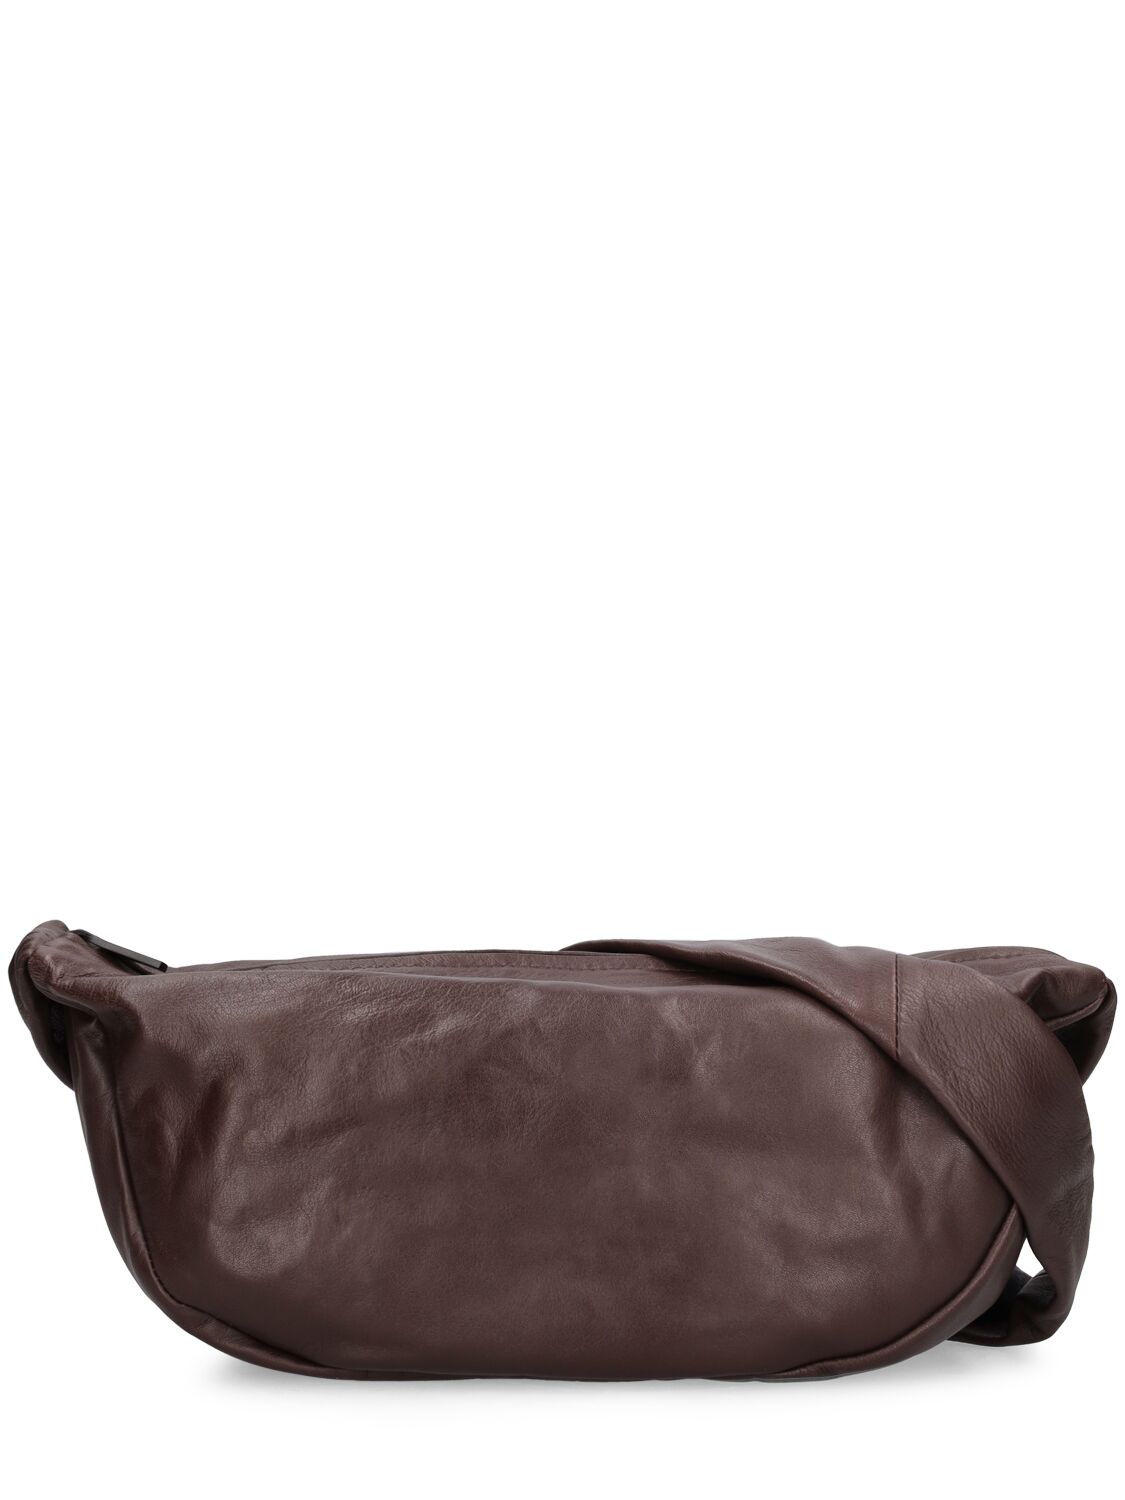 St.agni Soft Crescent Leather Shoulder Bag In Chocolate